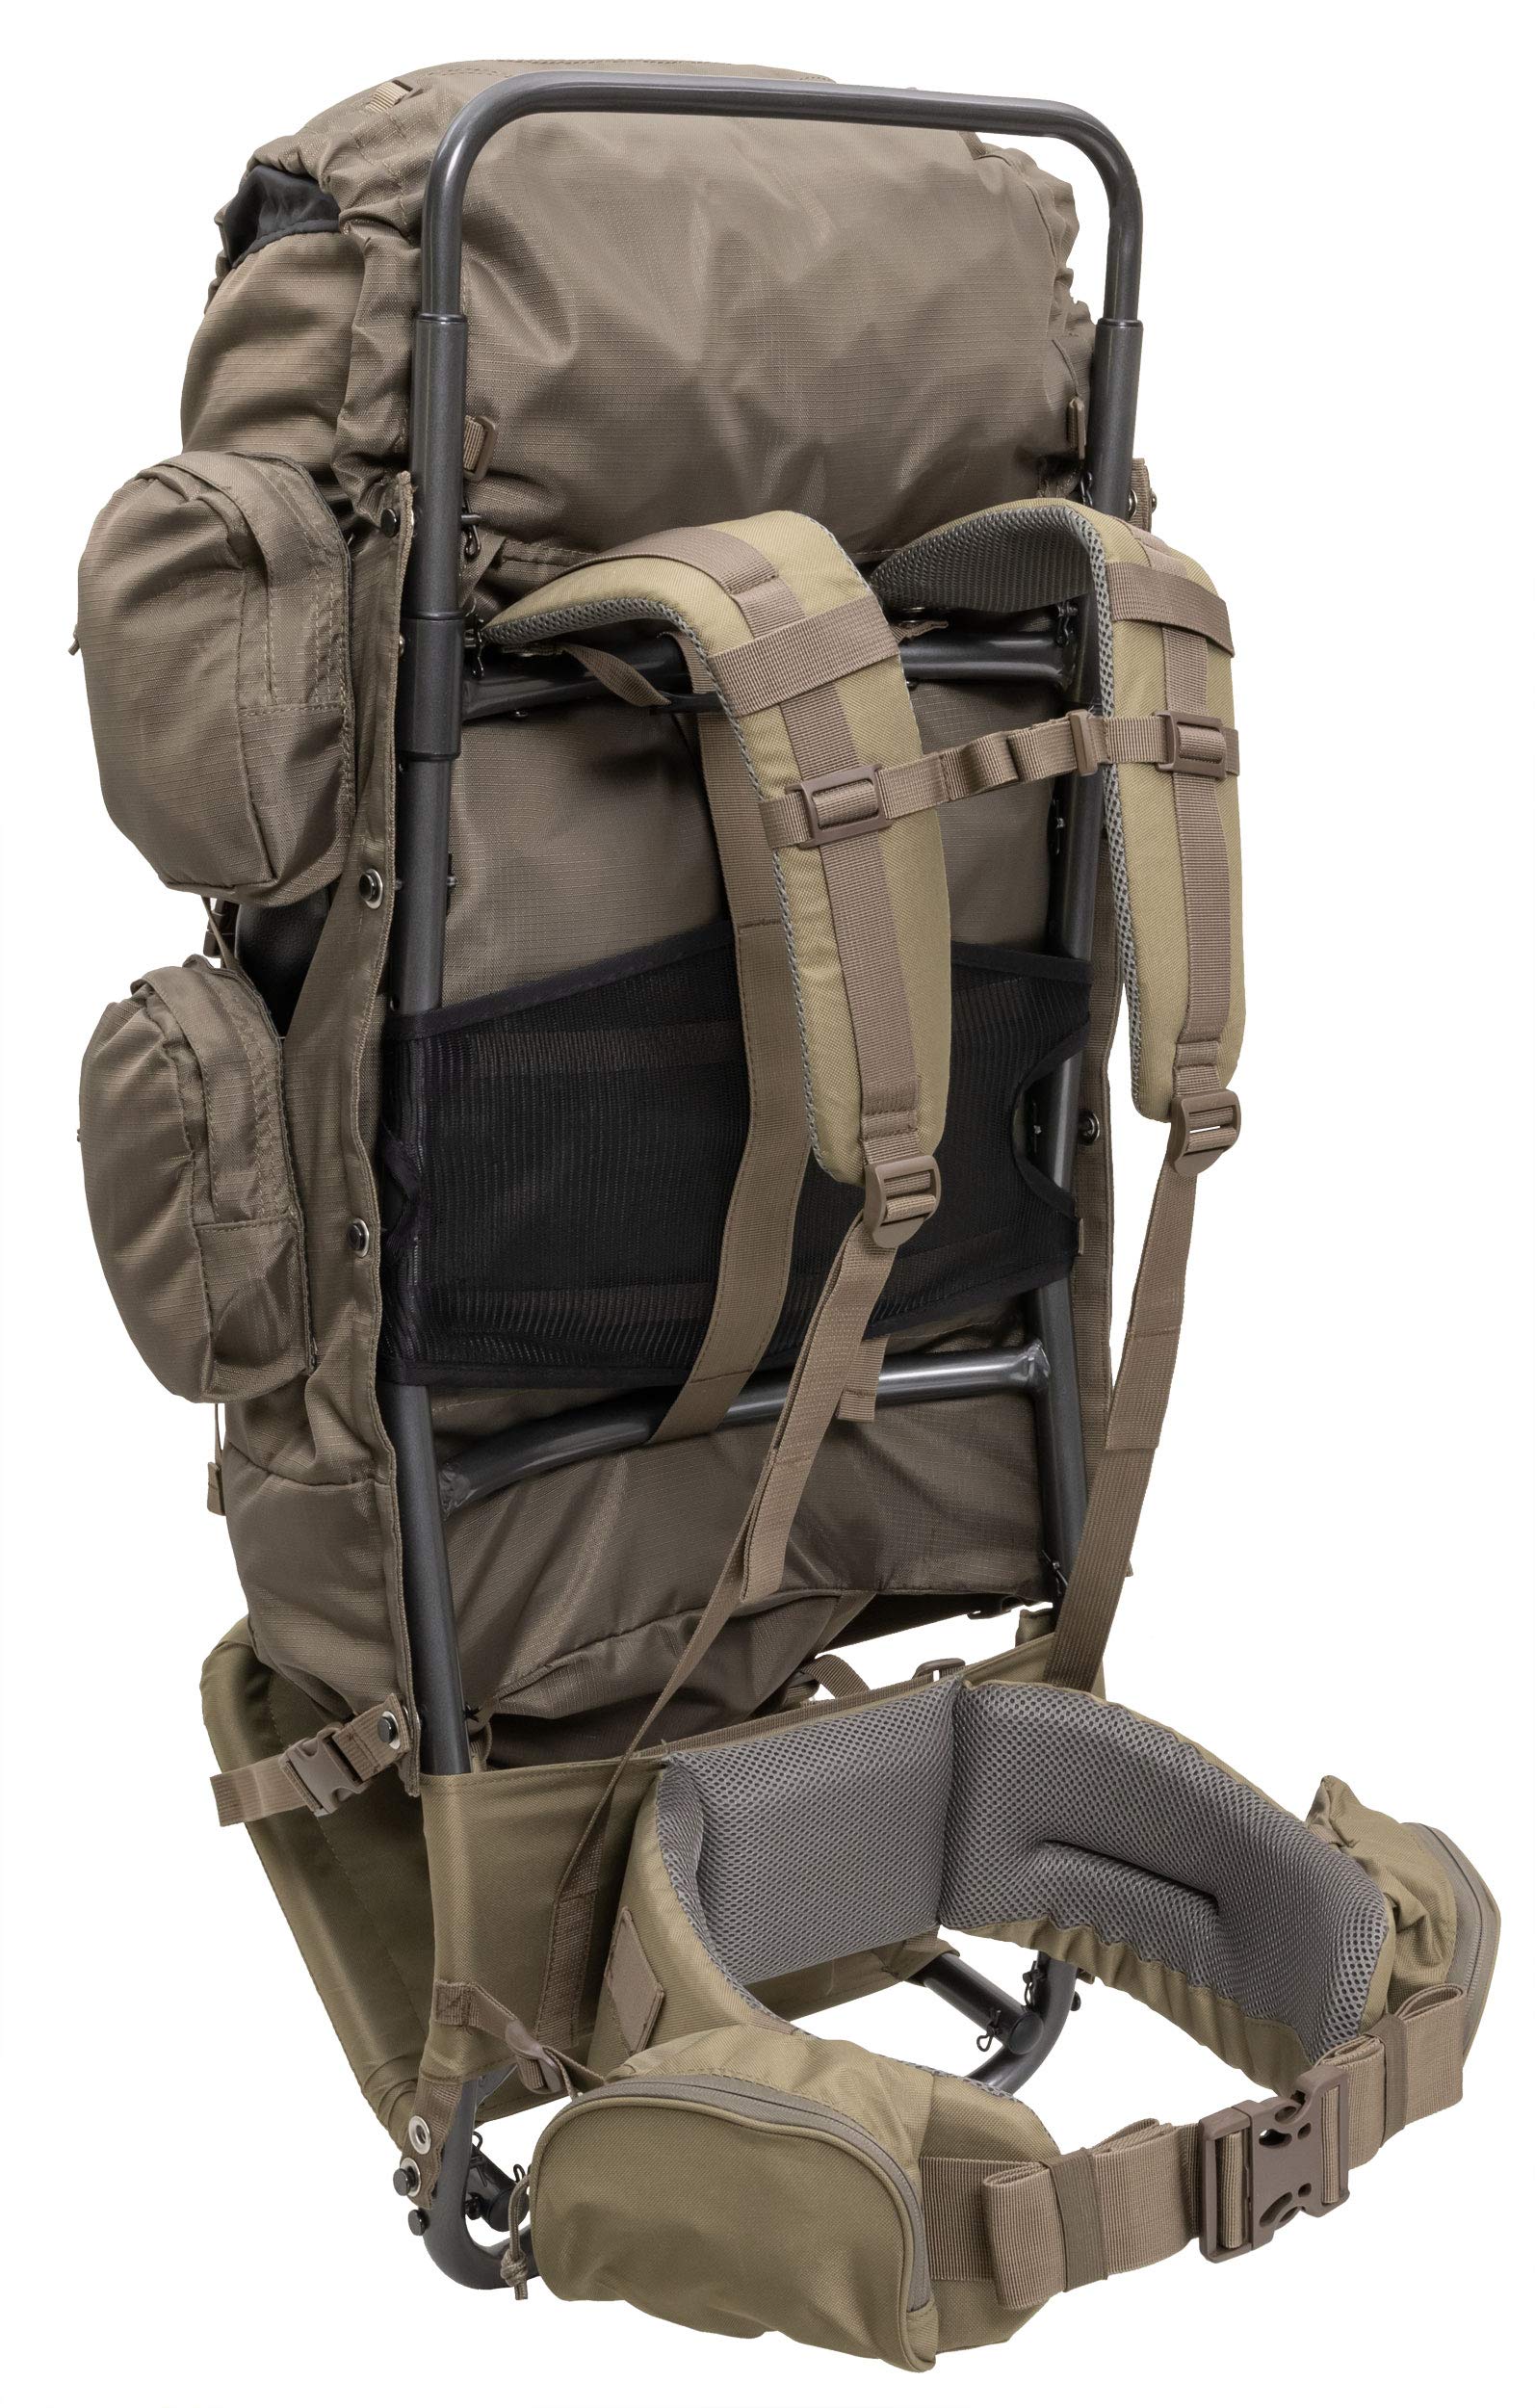 ALPS OutdoorZ Commander + Pack Bag Briar - $195.00